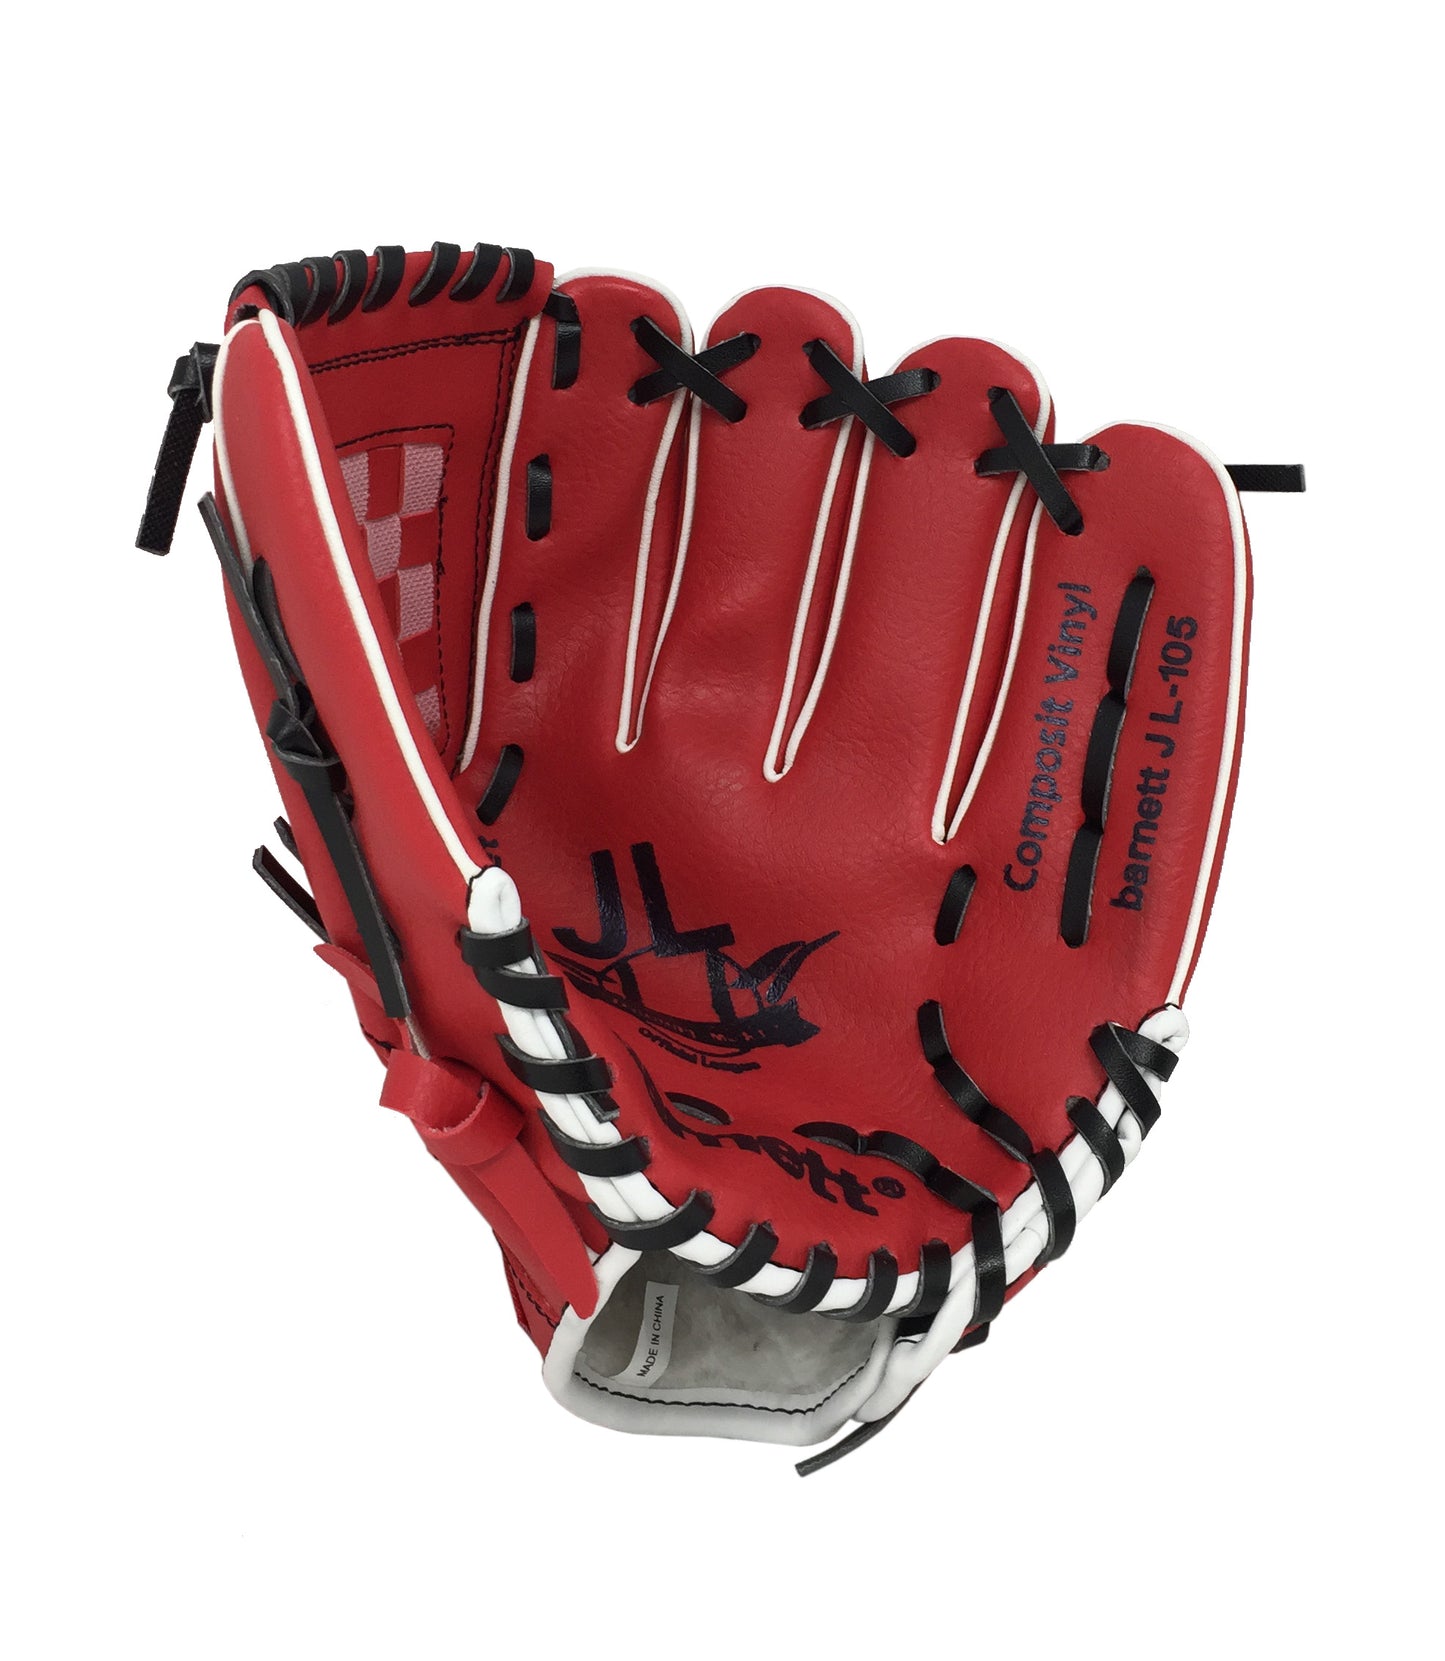 JL-105 - Gant de baseball, outfield, polyuréthane, taille 10,5" rouge